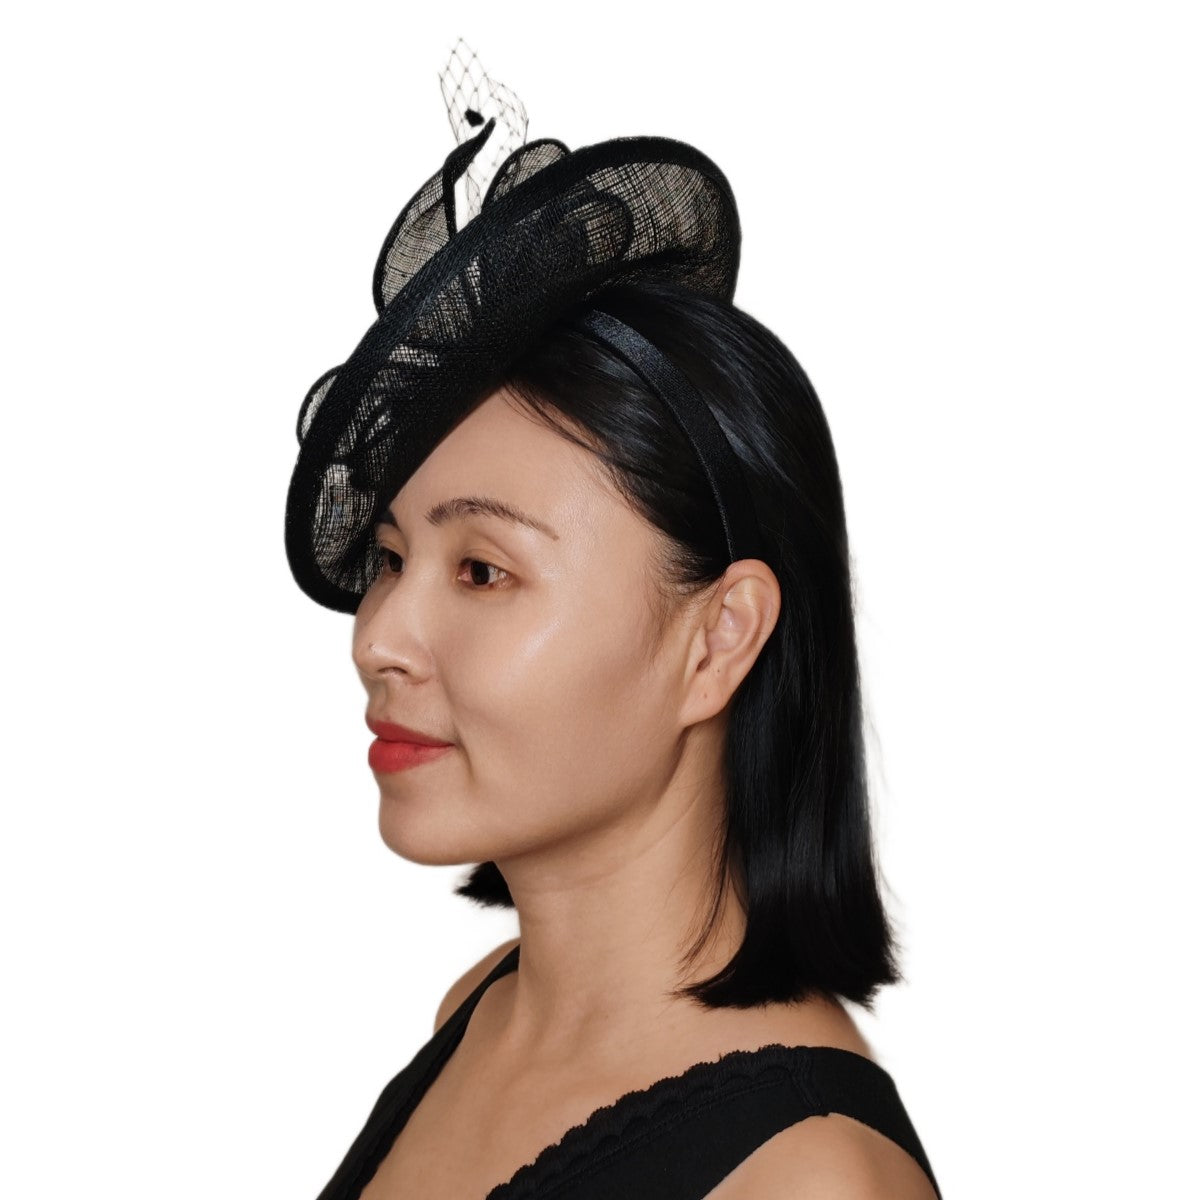 Black Ladies Fascinator Headband for church funerals